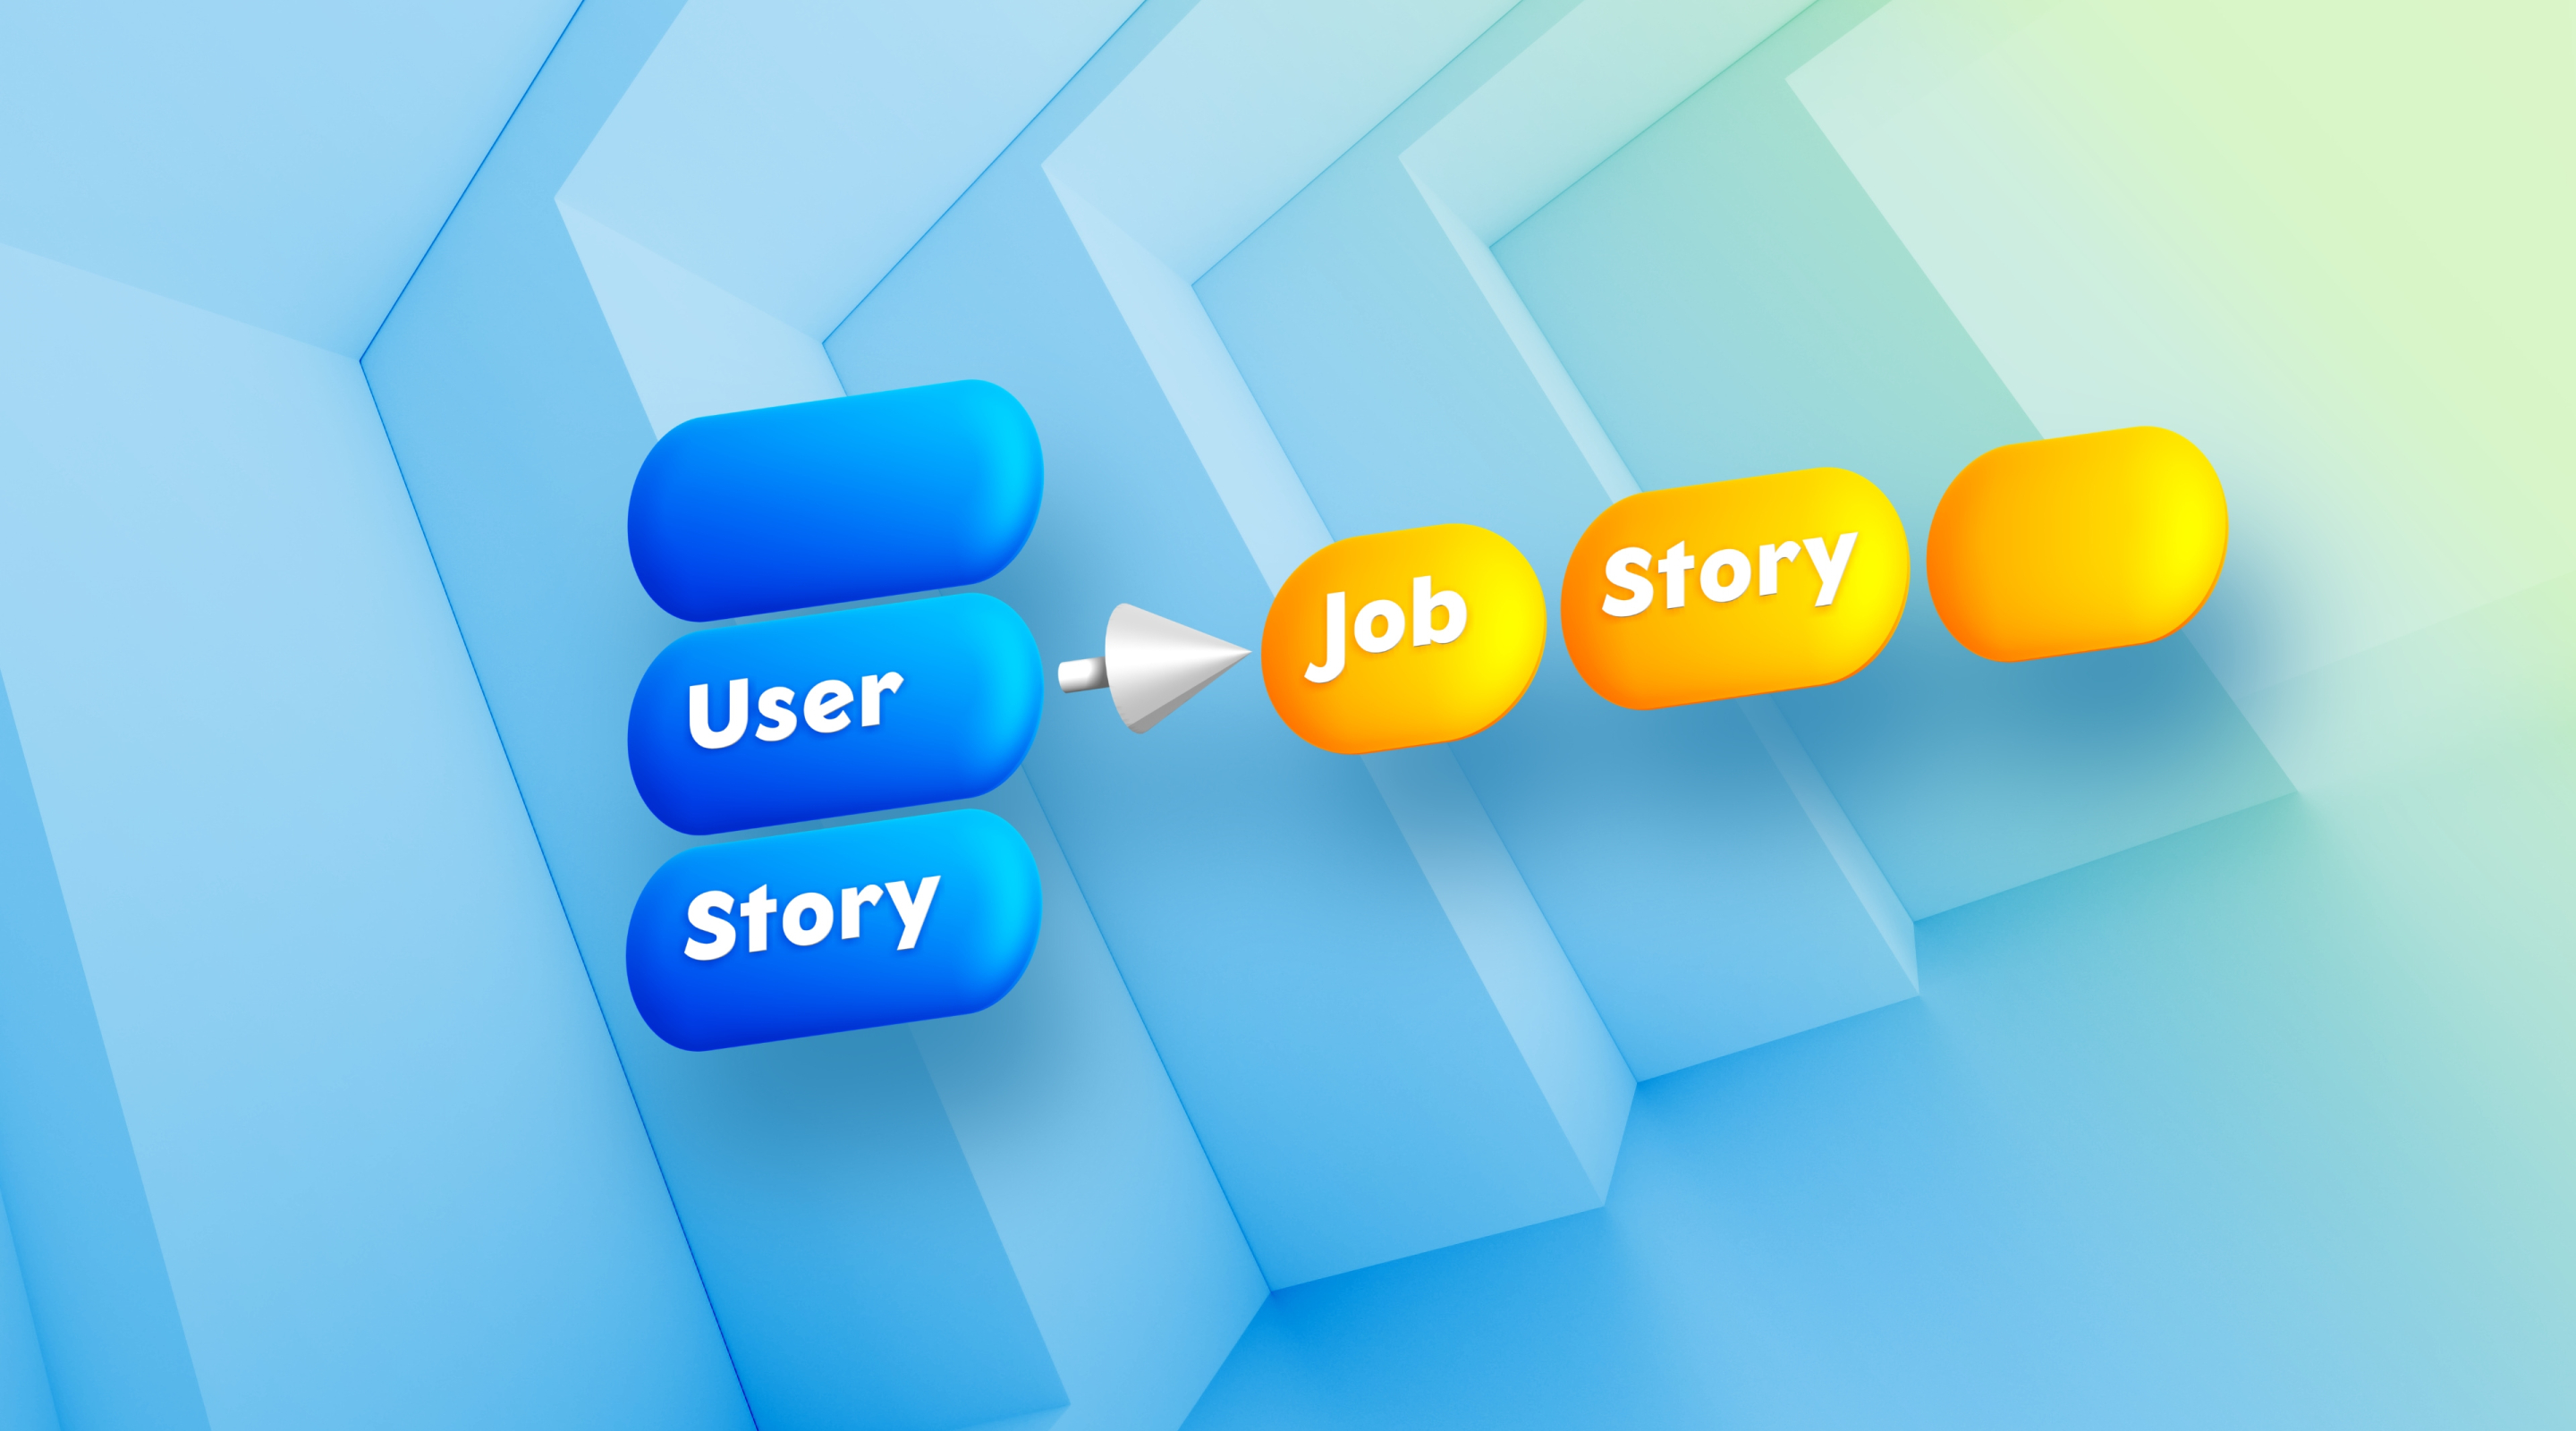 Заменяем User Story на Job Story